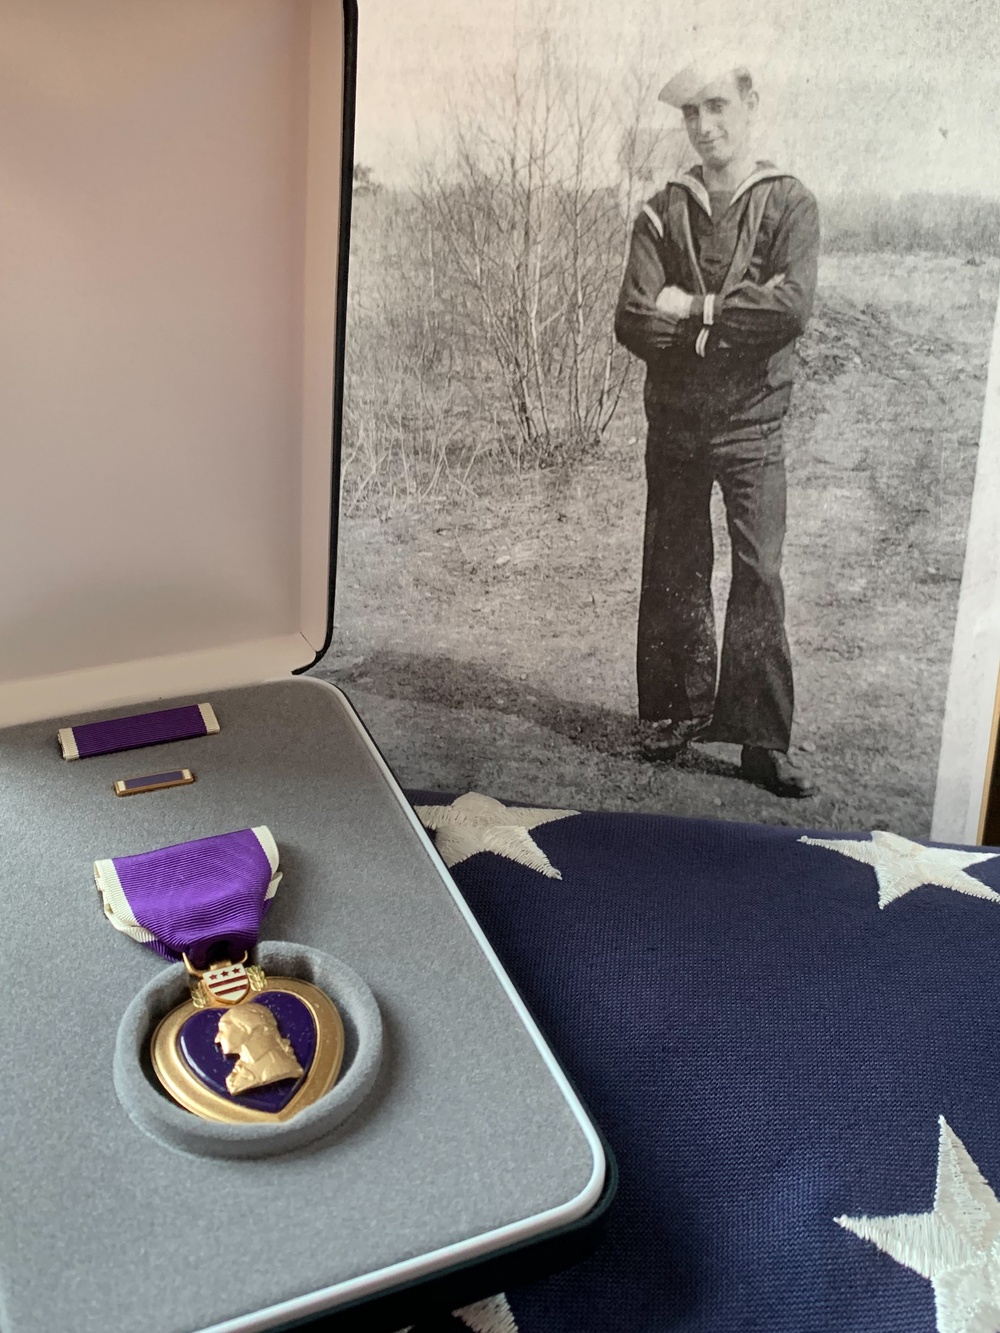 Coast Guard presents Purple Heart medal in Newport, Rhode Island